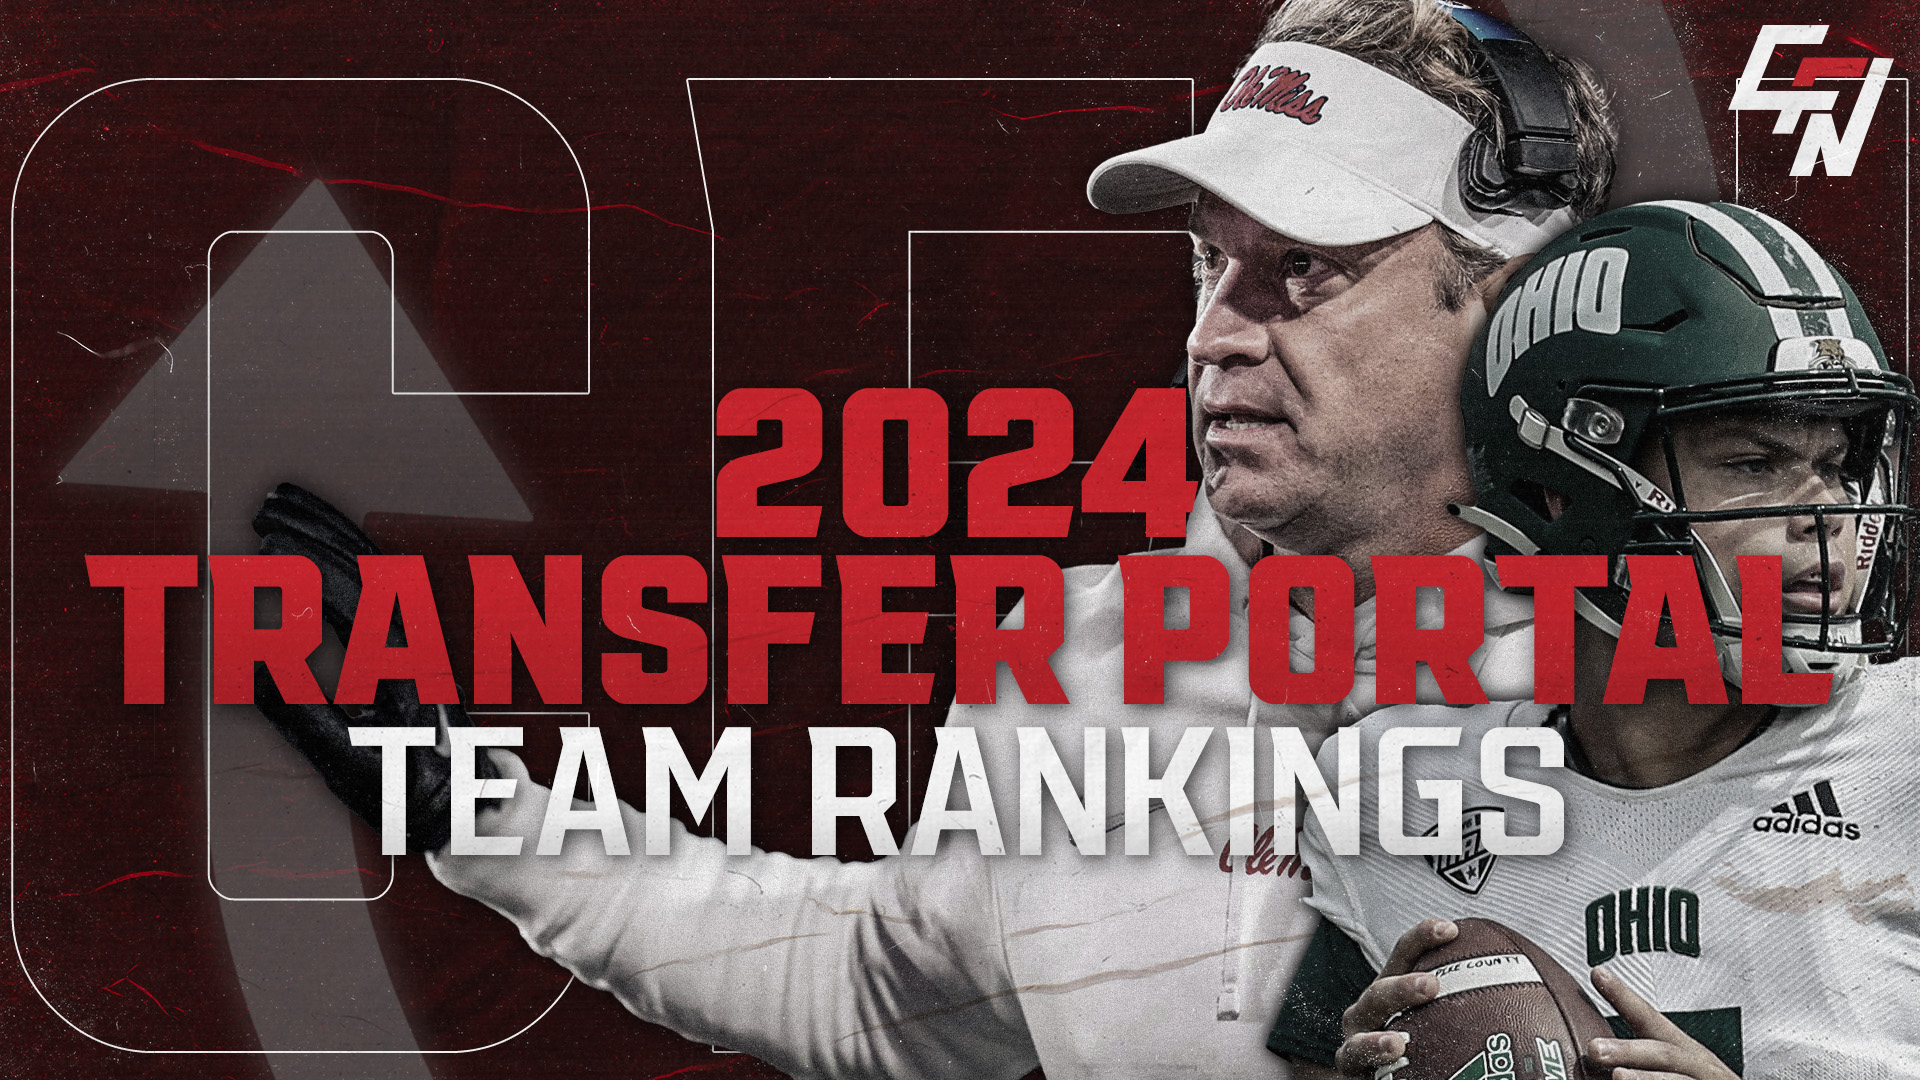 2024 Transfer Portal Team Rankings